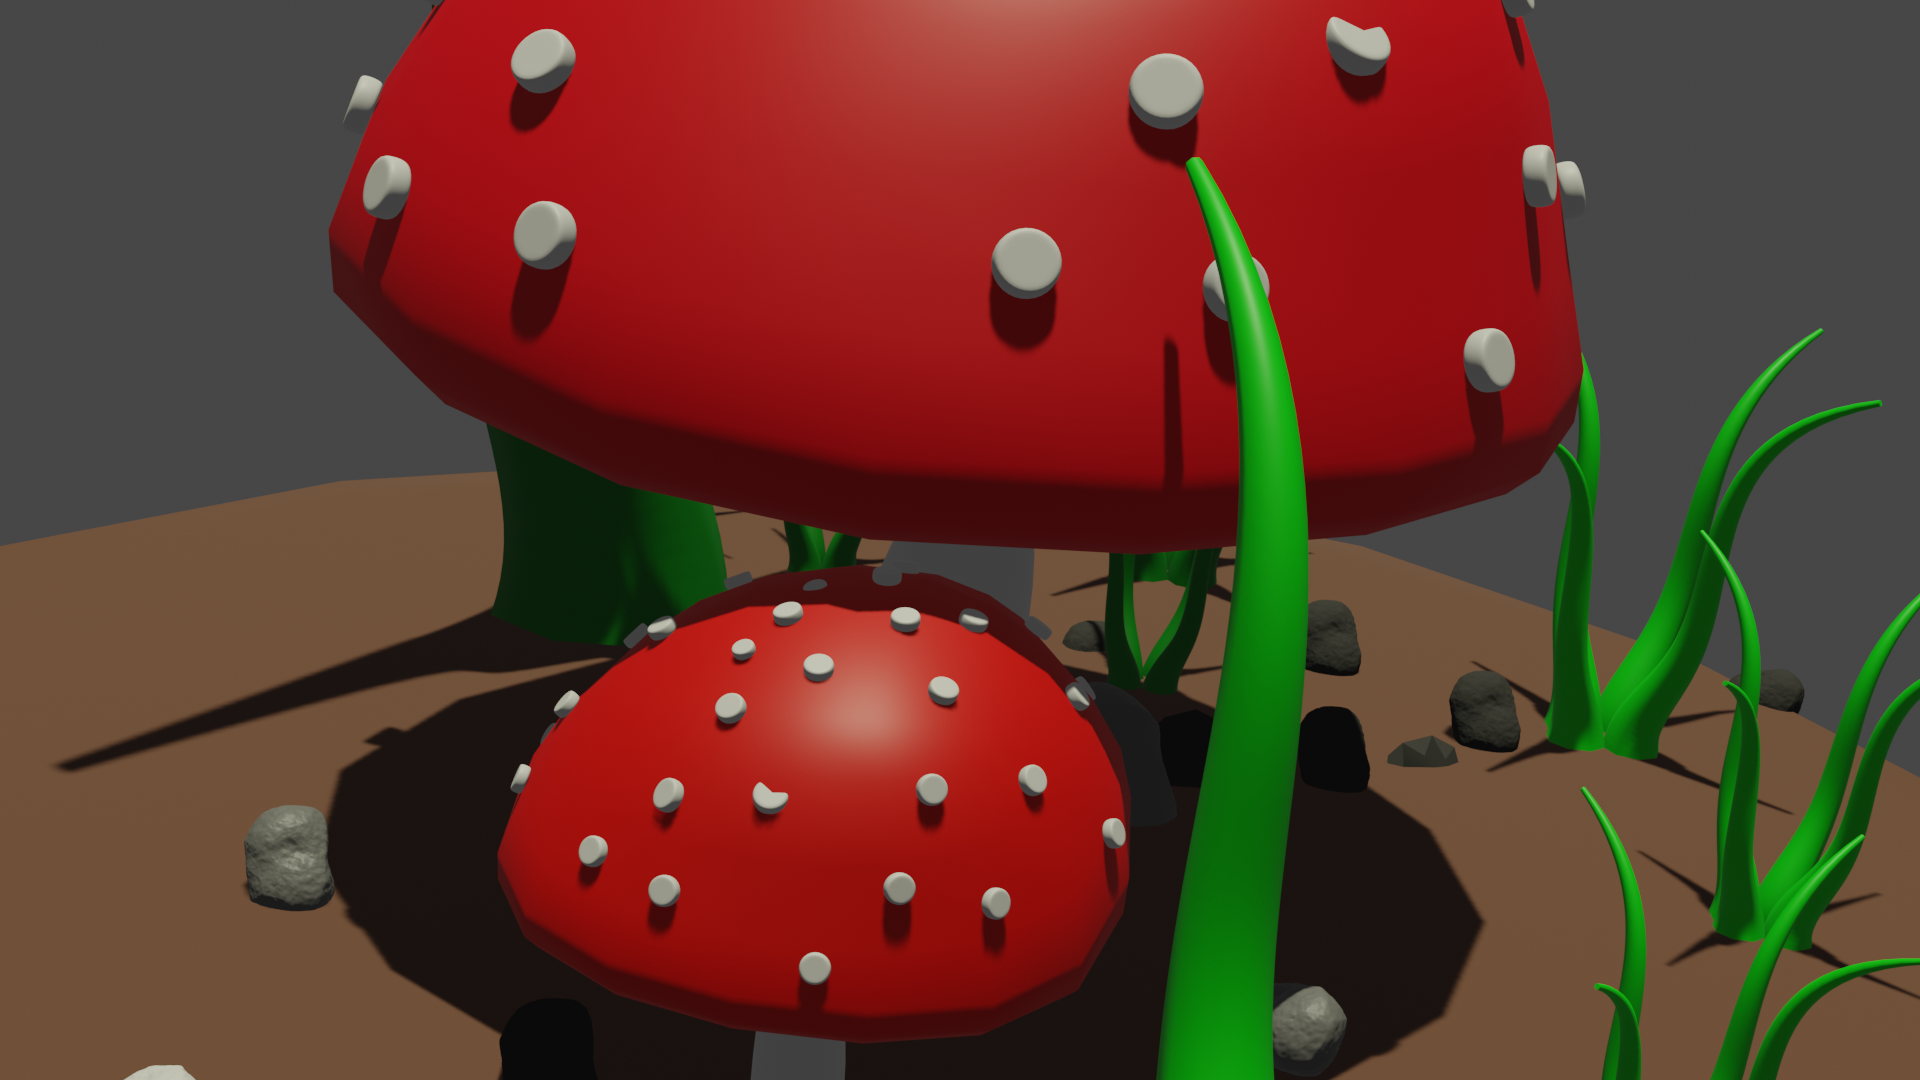 Mushroom island preview image 2